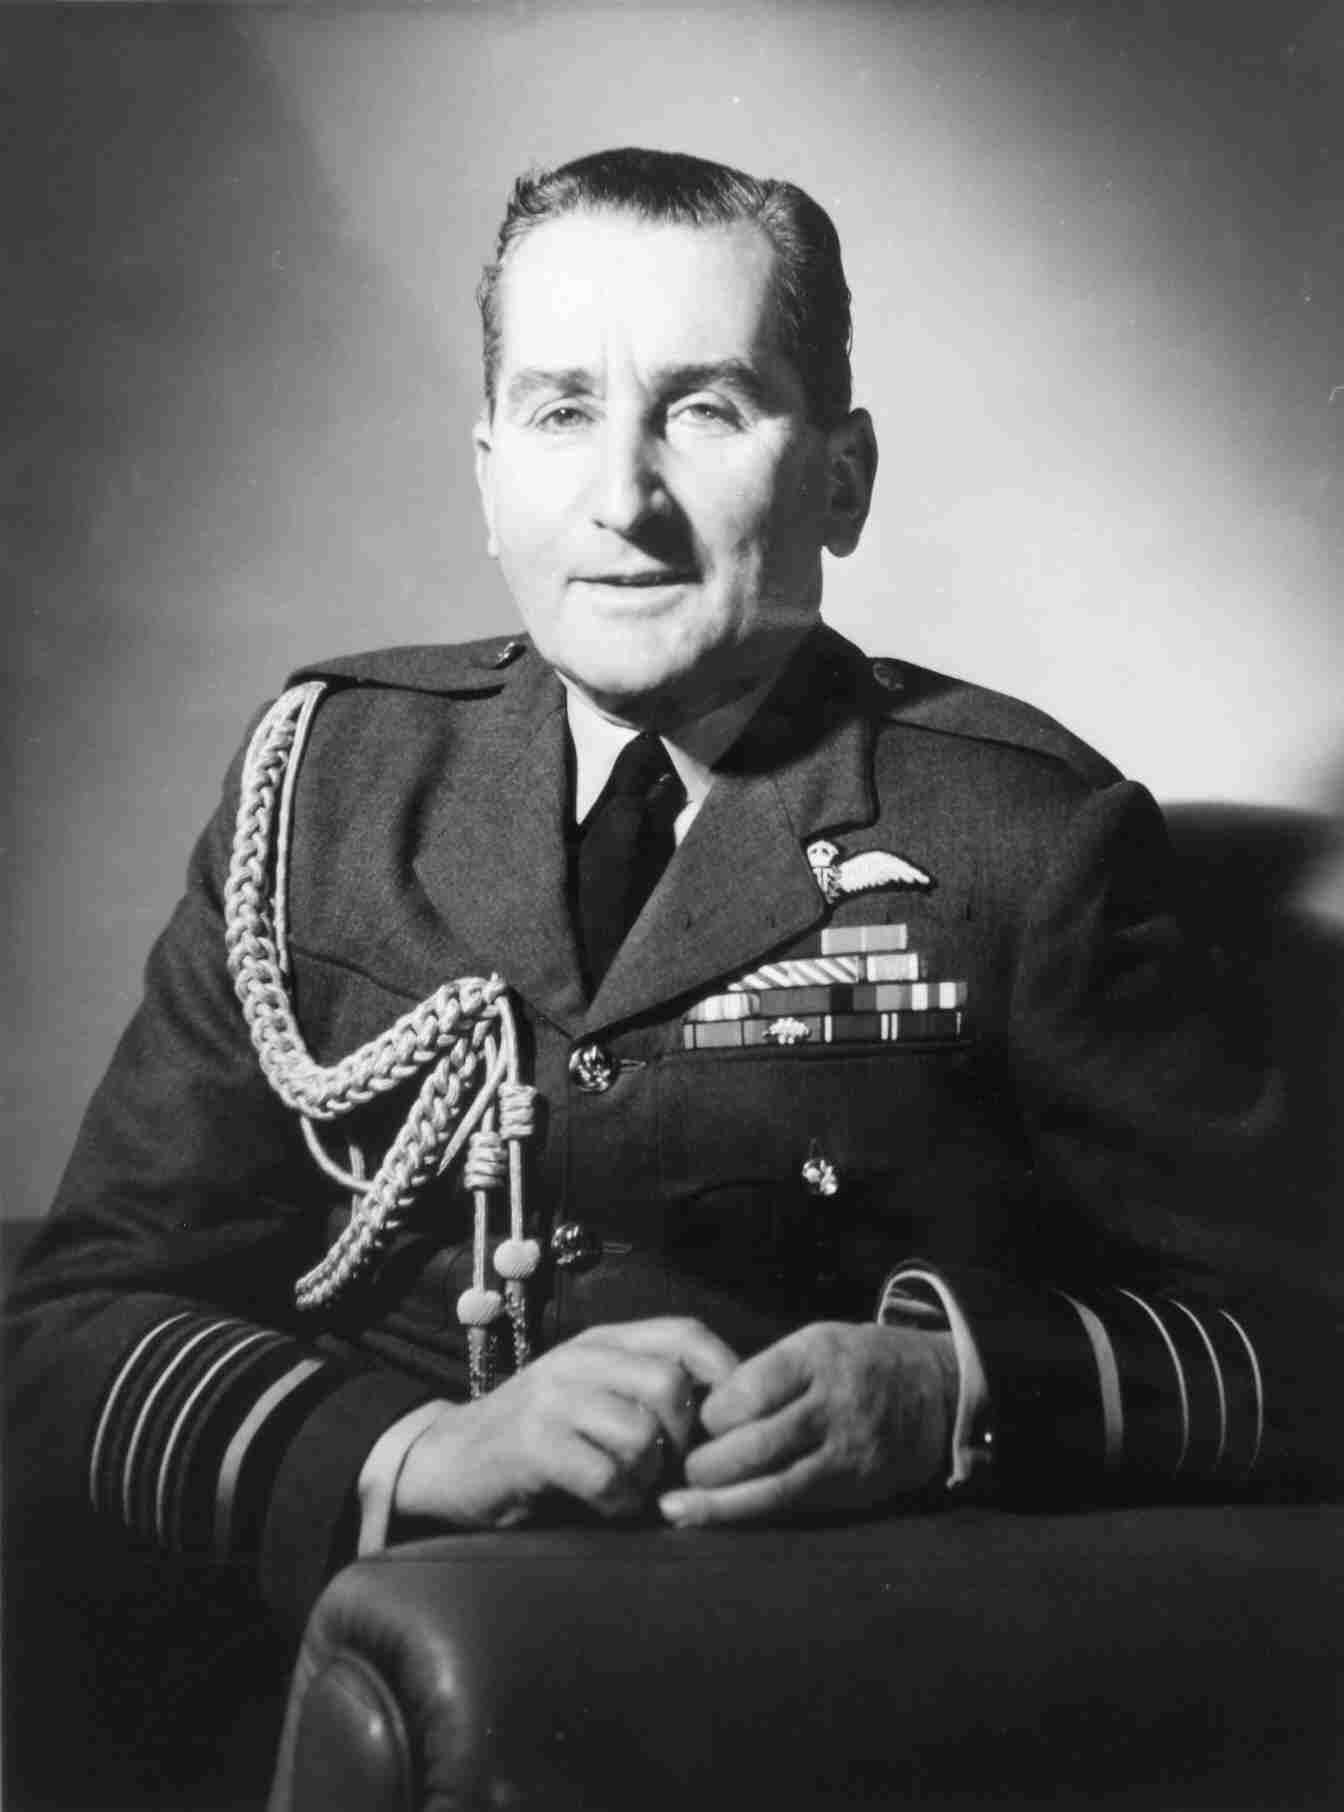 Air Chief Marshal Sir Francis Fogarty